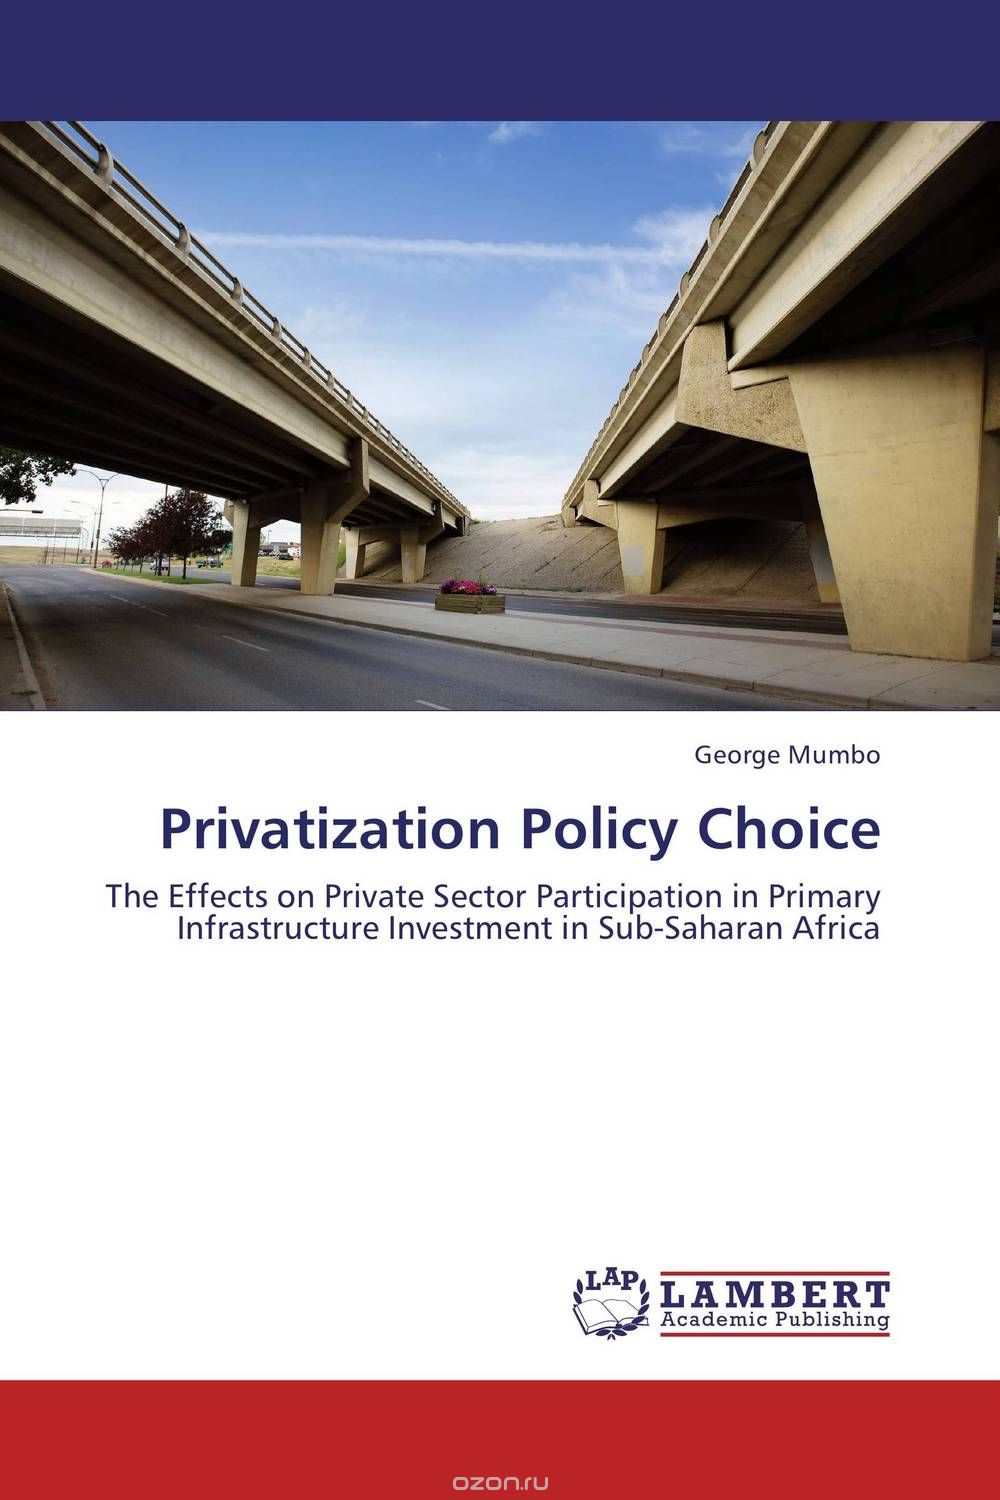 Скачать книгу "Privatization Policy Choice"